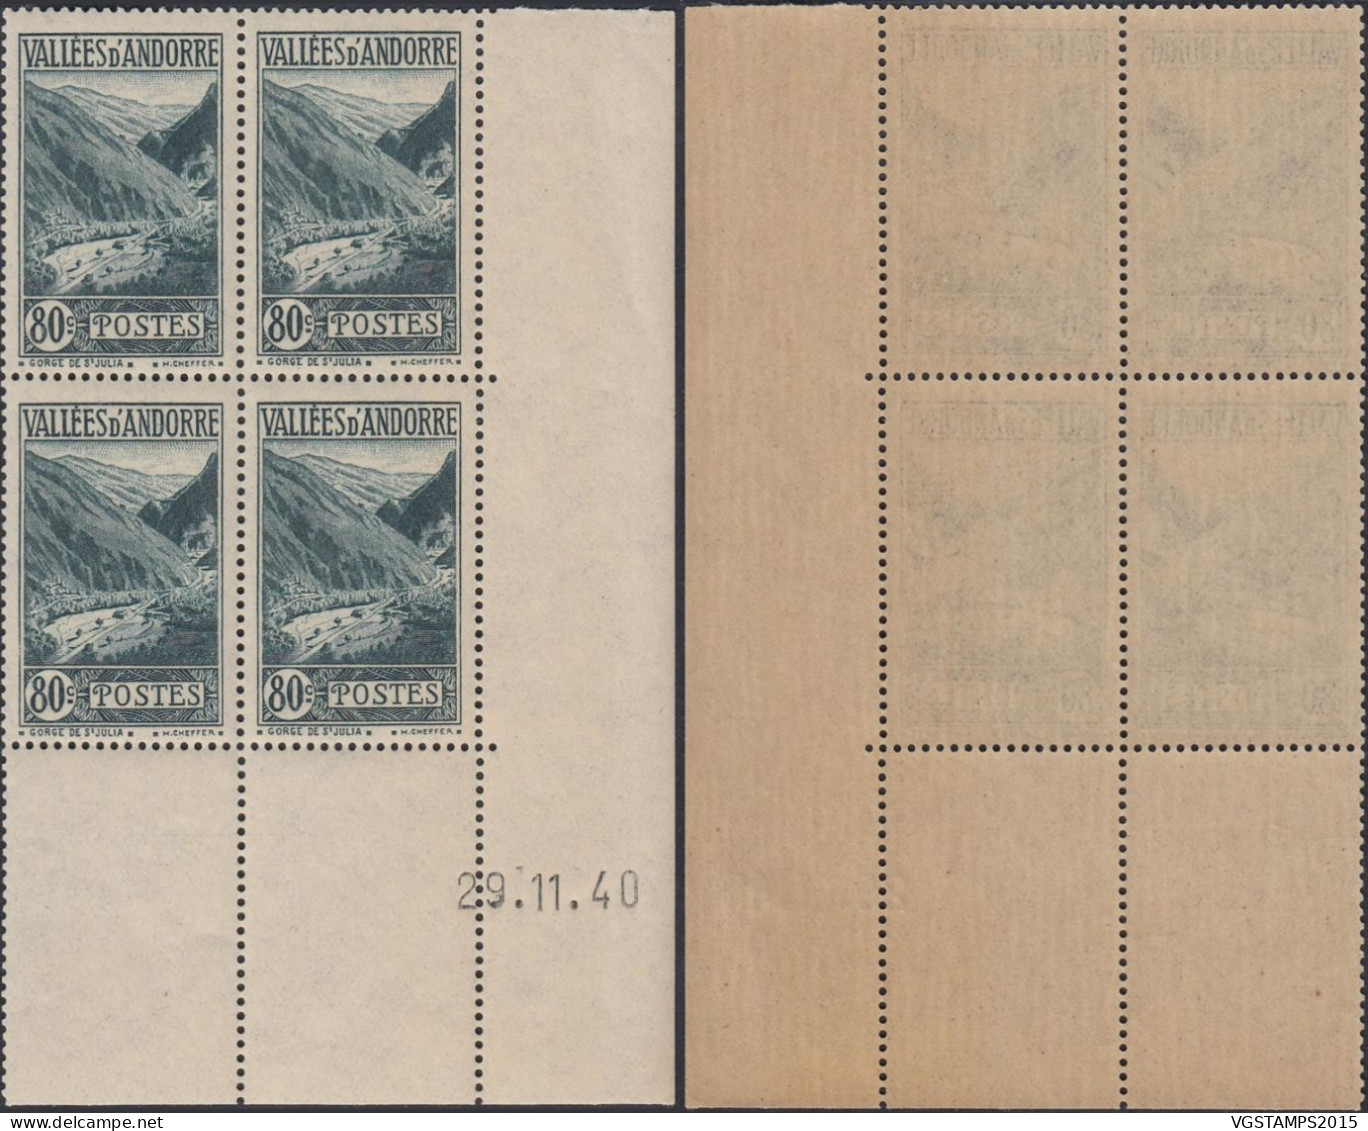 Andorre 1941 - Andorre Française - Timbres Neufs. Yvert Nr.: 72. Michel Nr.: 77. Coin Daté: 29/11/40.... (EB) AR-02068 - Neufs